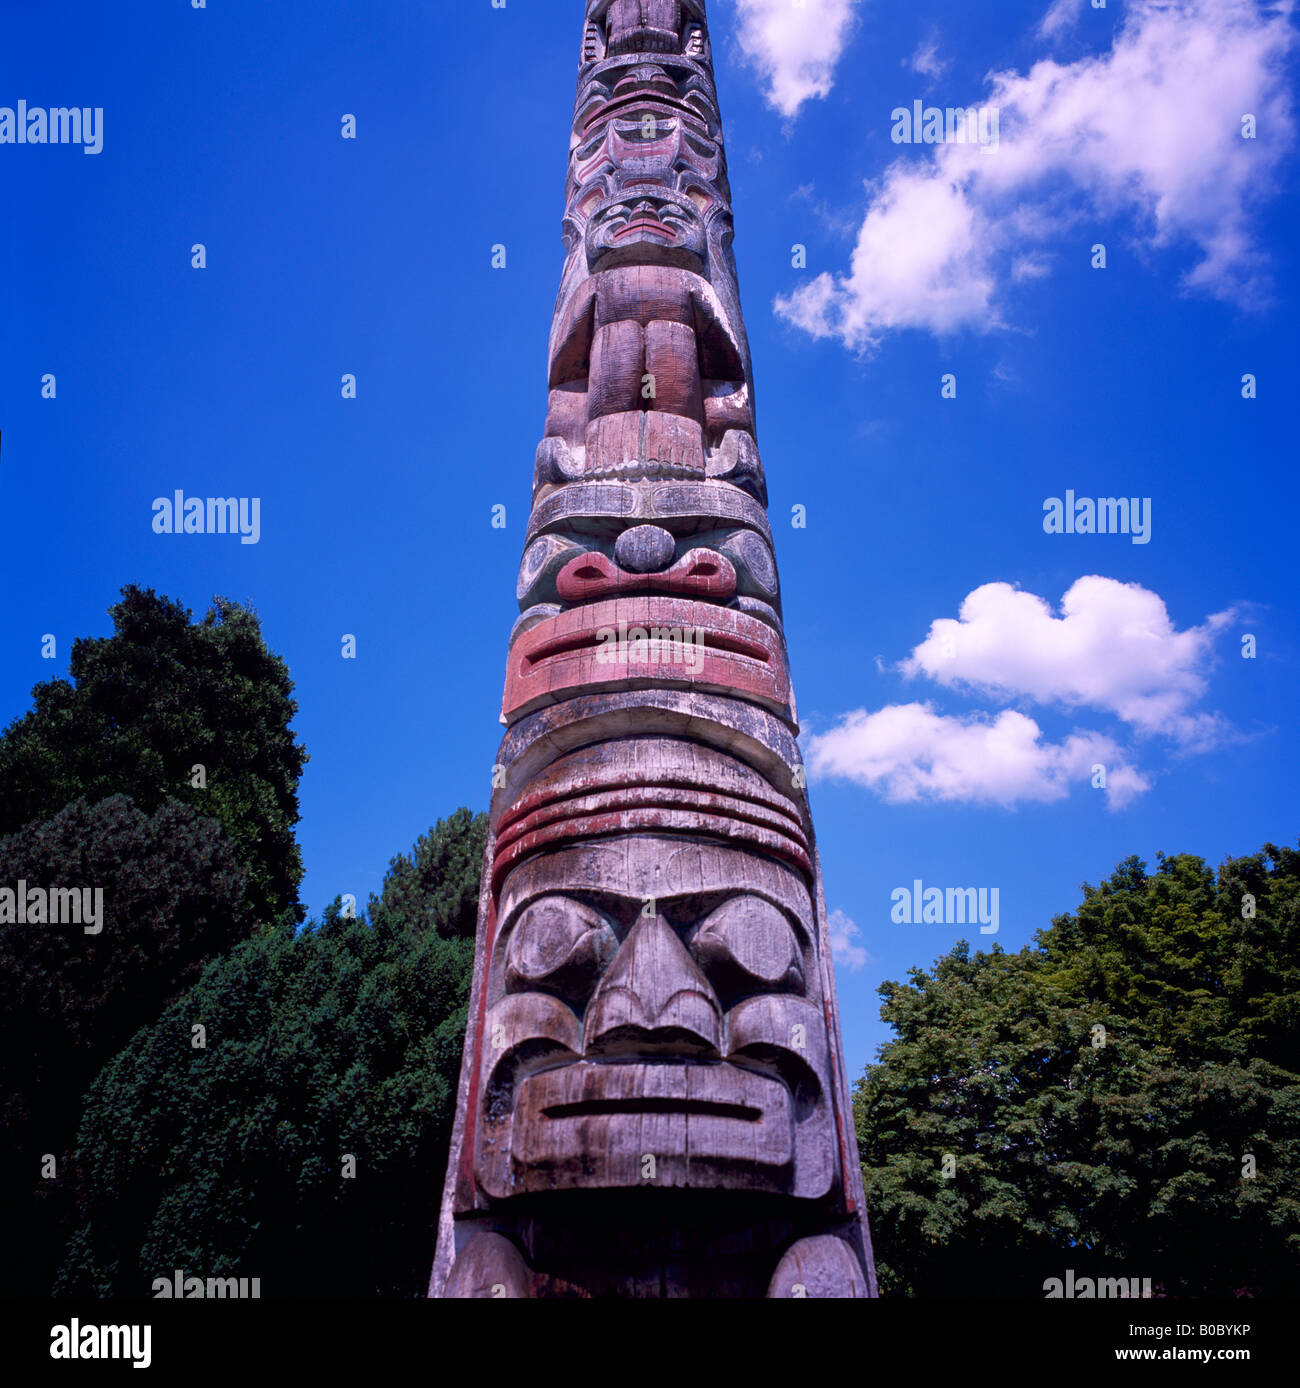 Kwakwaka'wakw (Kwakiutl) Totem Pole, Kitsilano, Vancouver, BC, British Columbia, Canada - Hadden Park at Maritime Museum Stock Photo